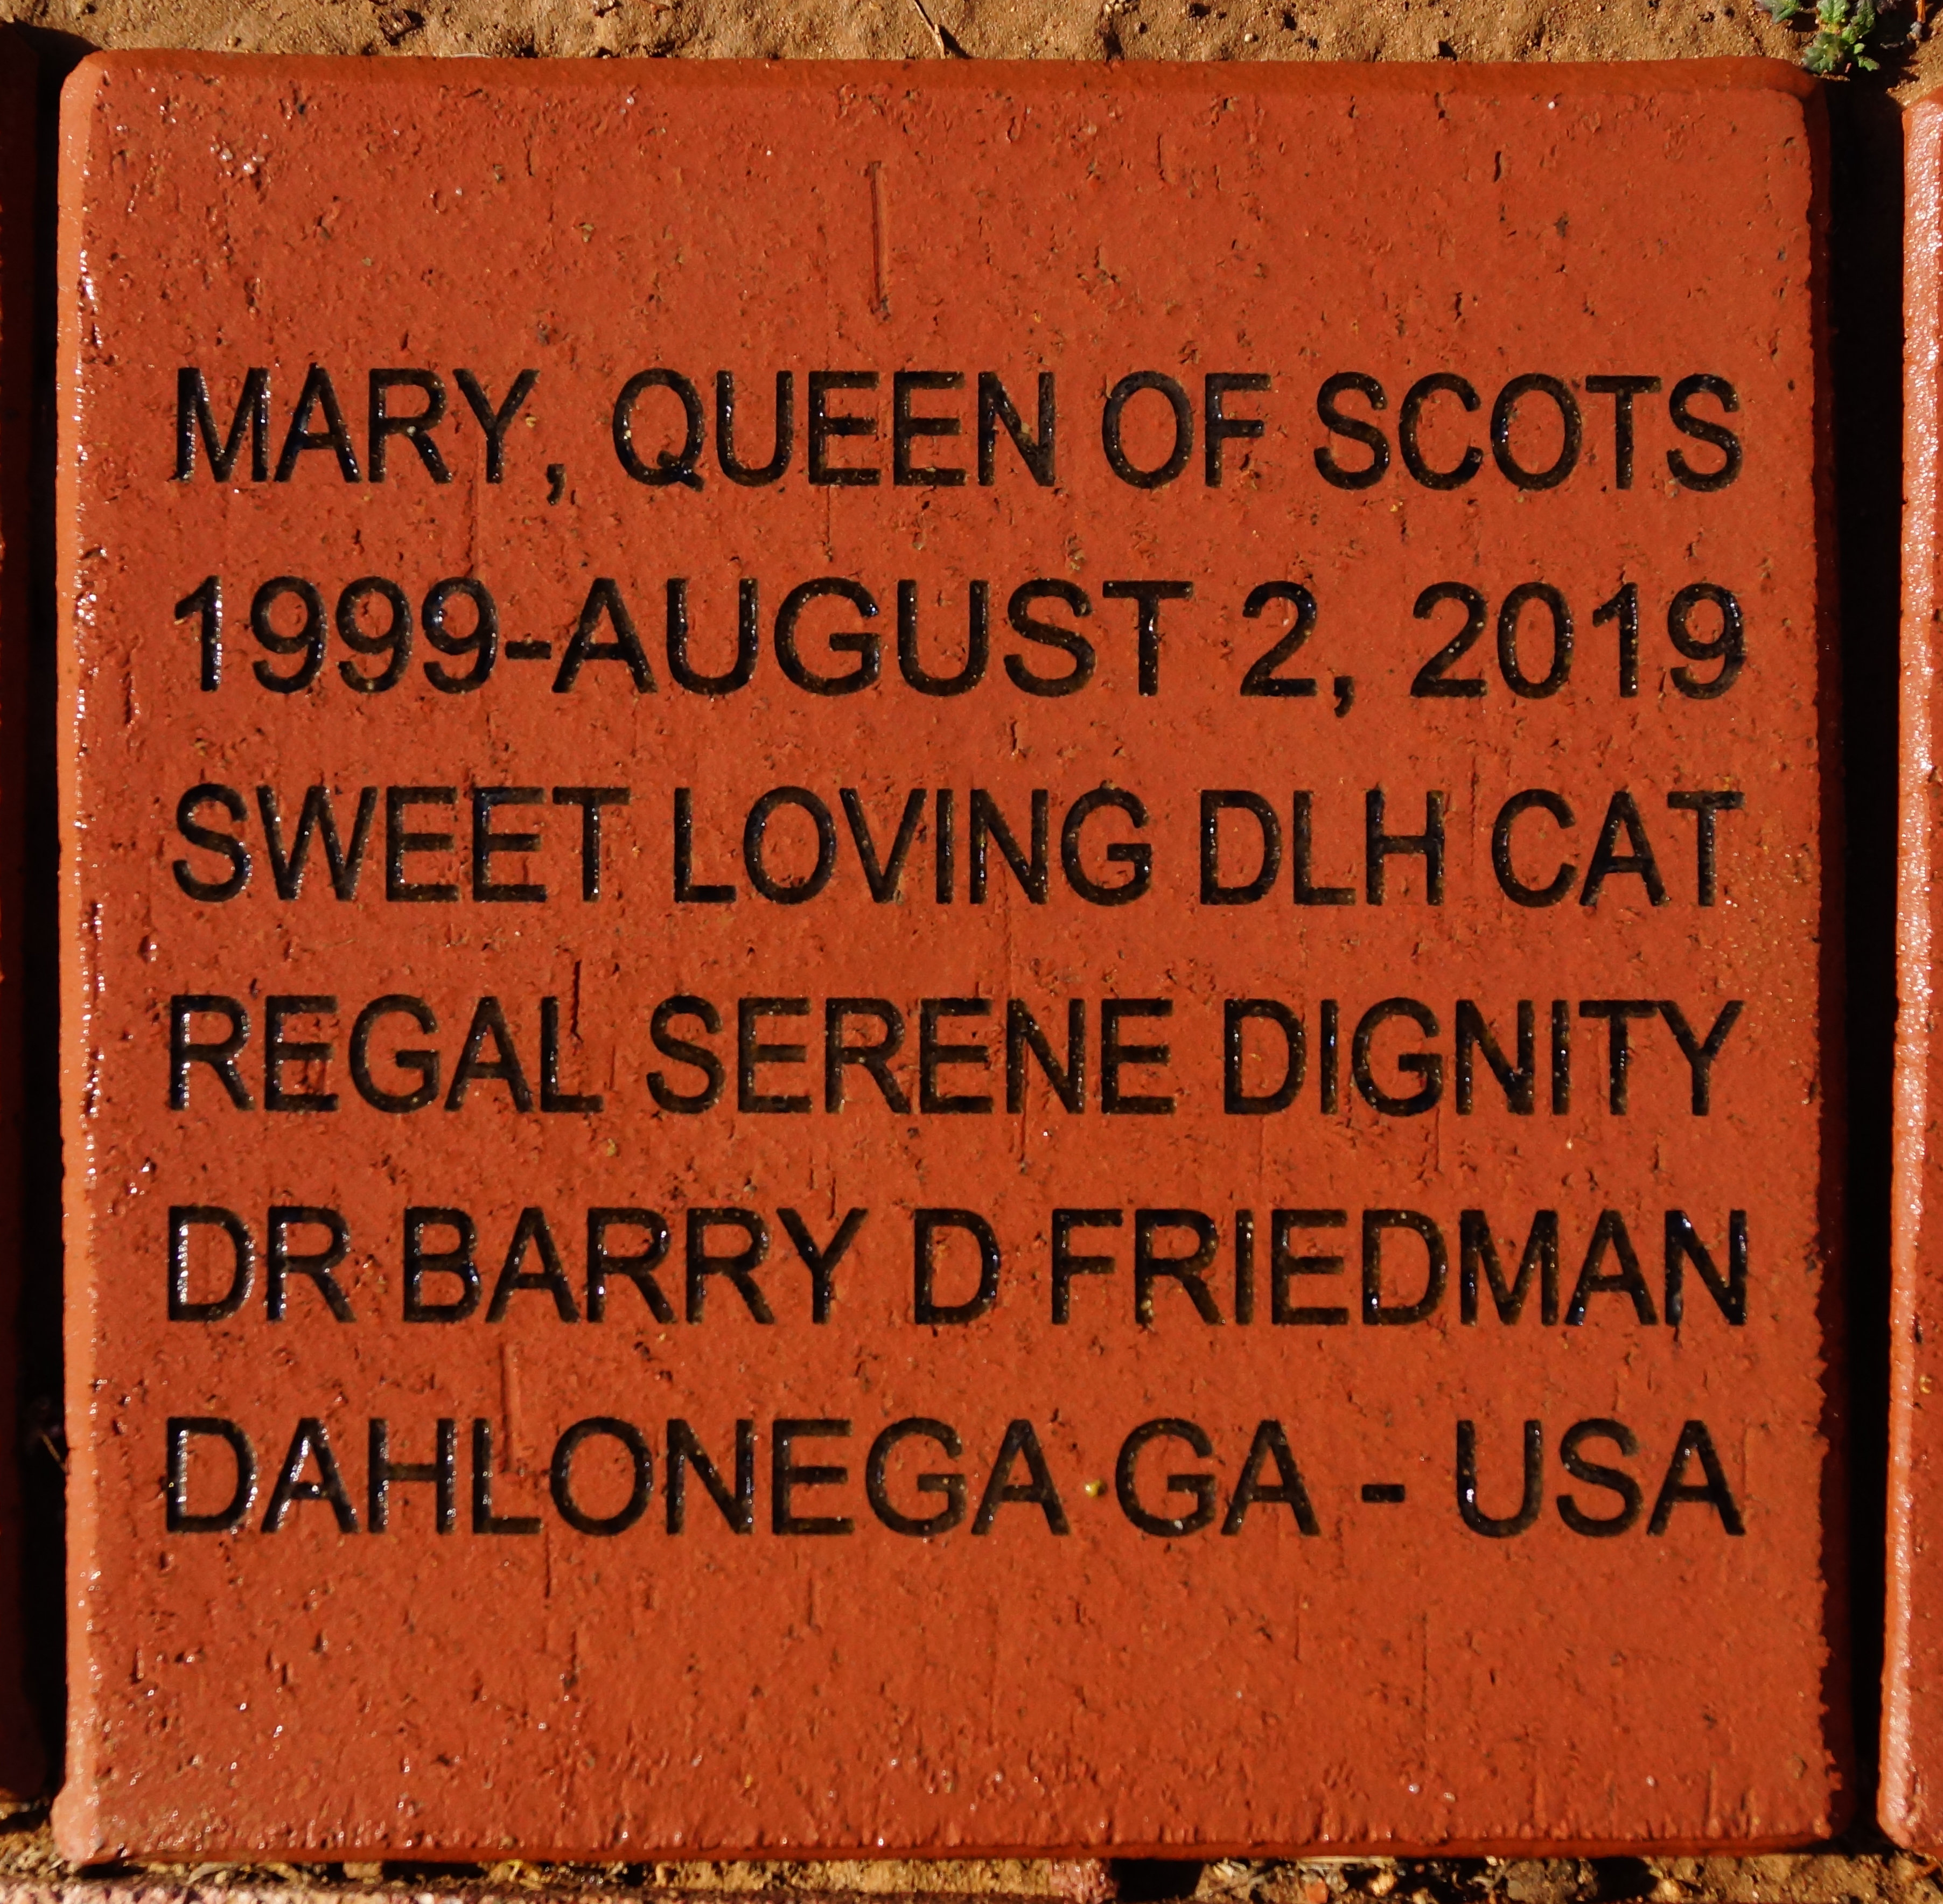 MaryQOS - Memorial Brick